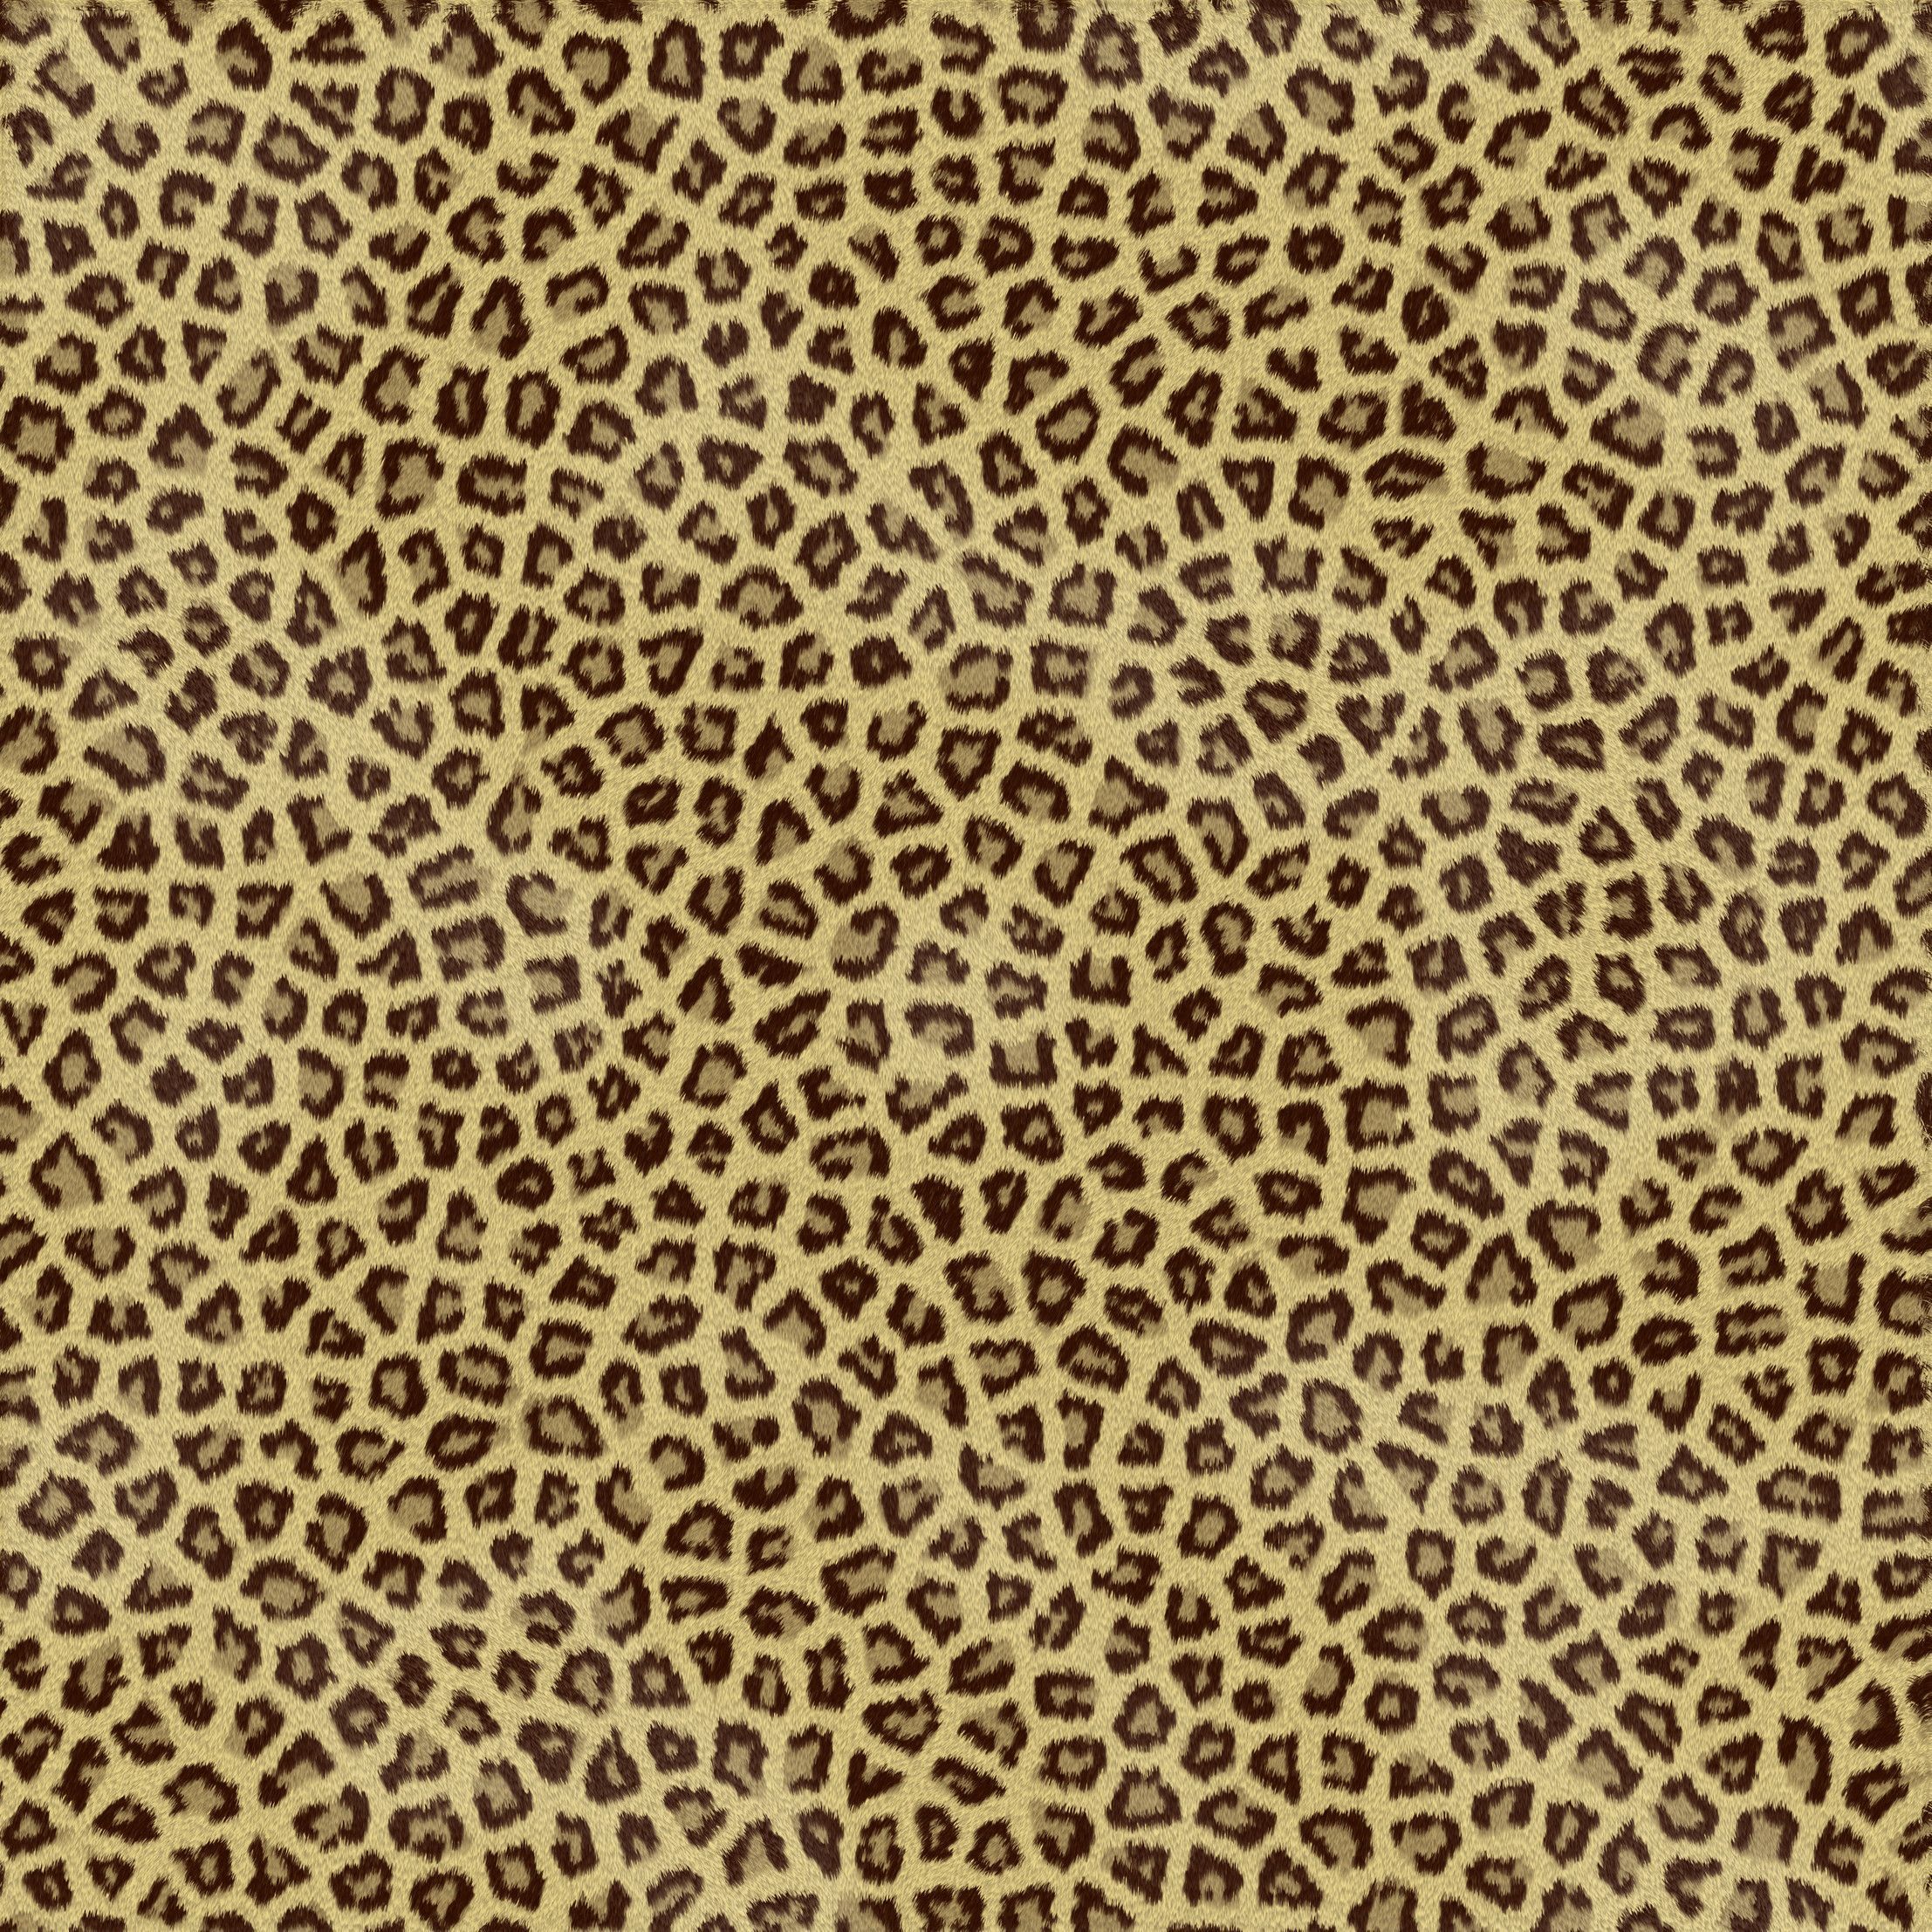 Cheetah Print Background - Leopard Print Drawstring Bag - HD Wallpaper 